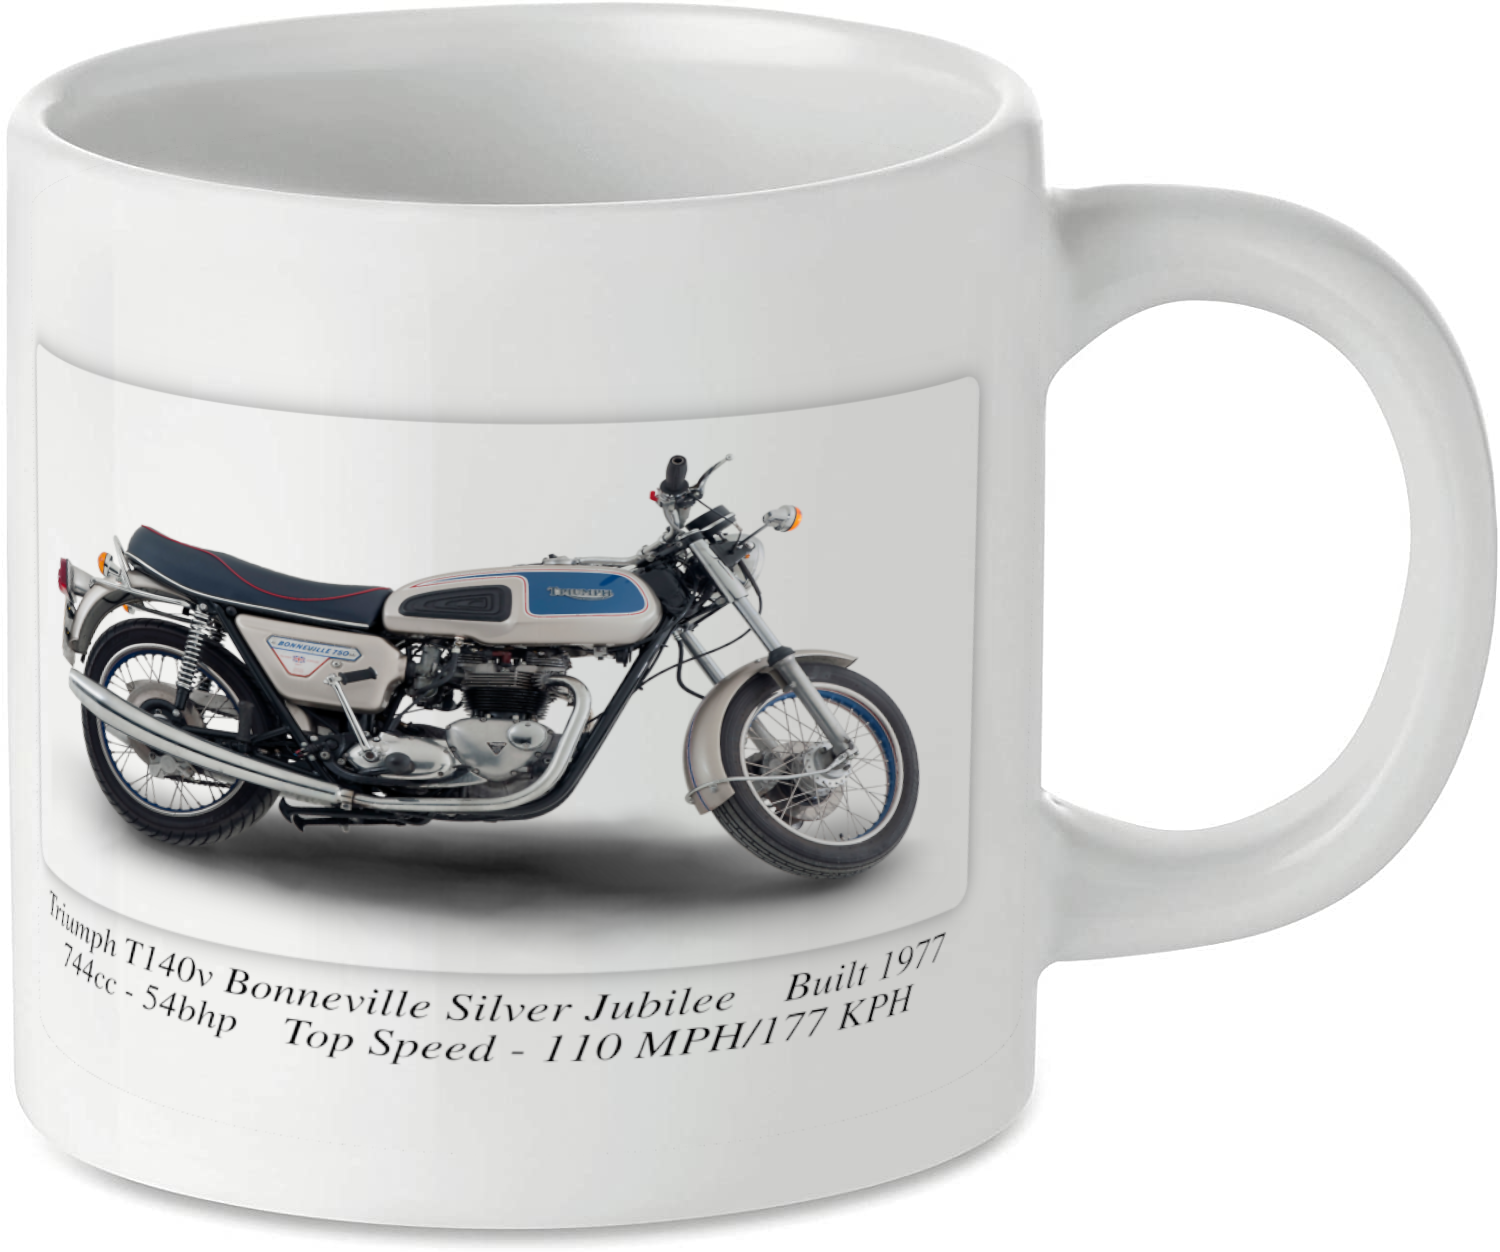 Triumph T140v Bonneville Silver Jubilee Motorbike Tea Coffee Mug Ideal Biker Gift Printed UK